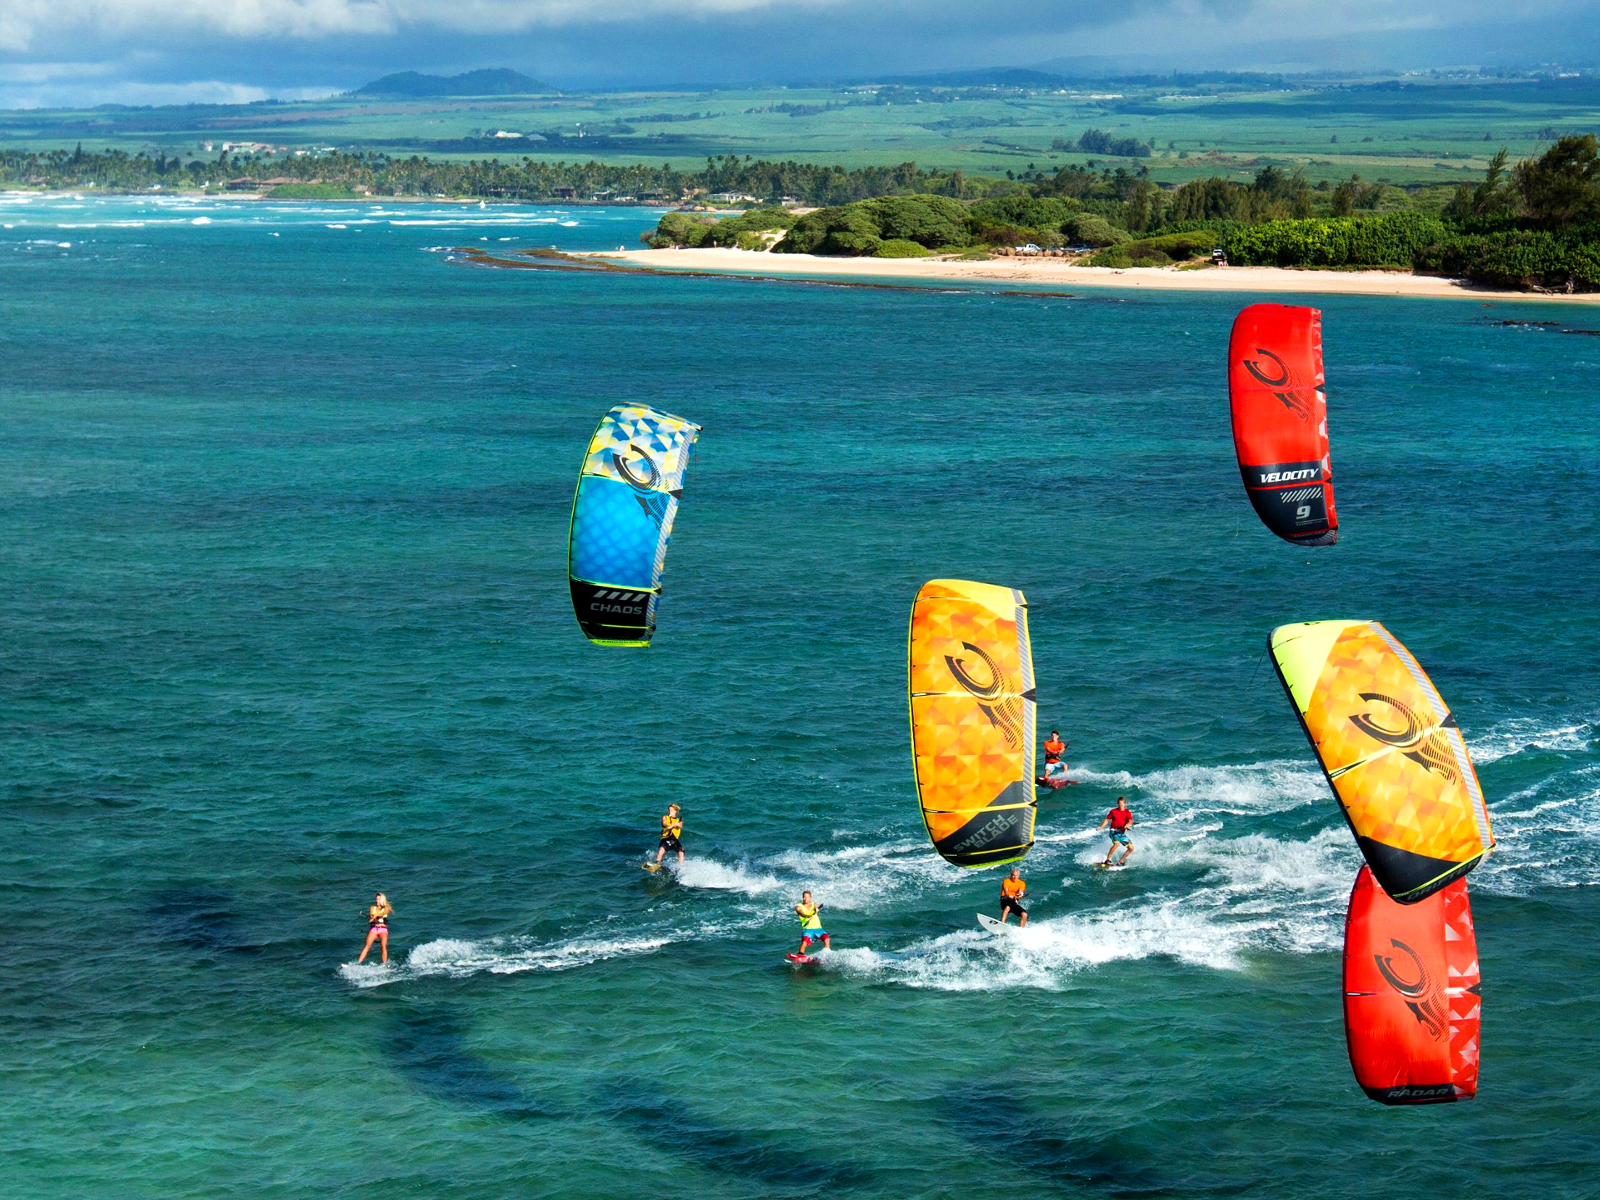 kitesurf wallpaper image - The 2015 Cabrinha Kites teamriders kitesurfing off the coast of Hawaii. - in resolution: Standard 4:3 1600 X 1200